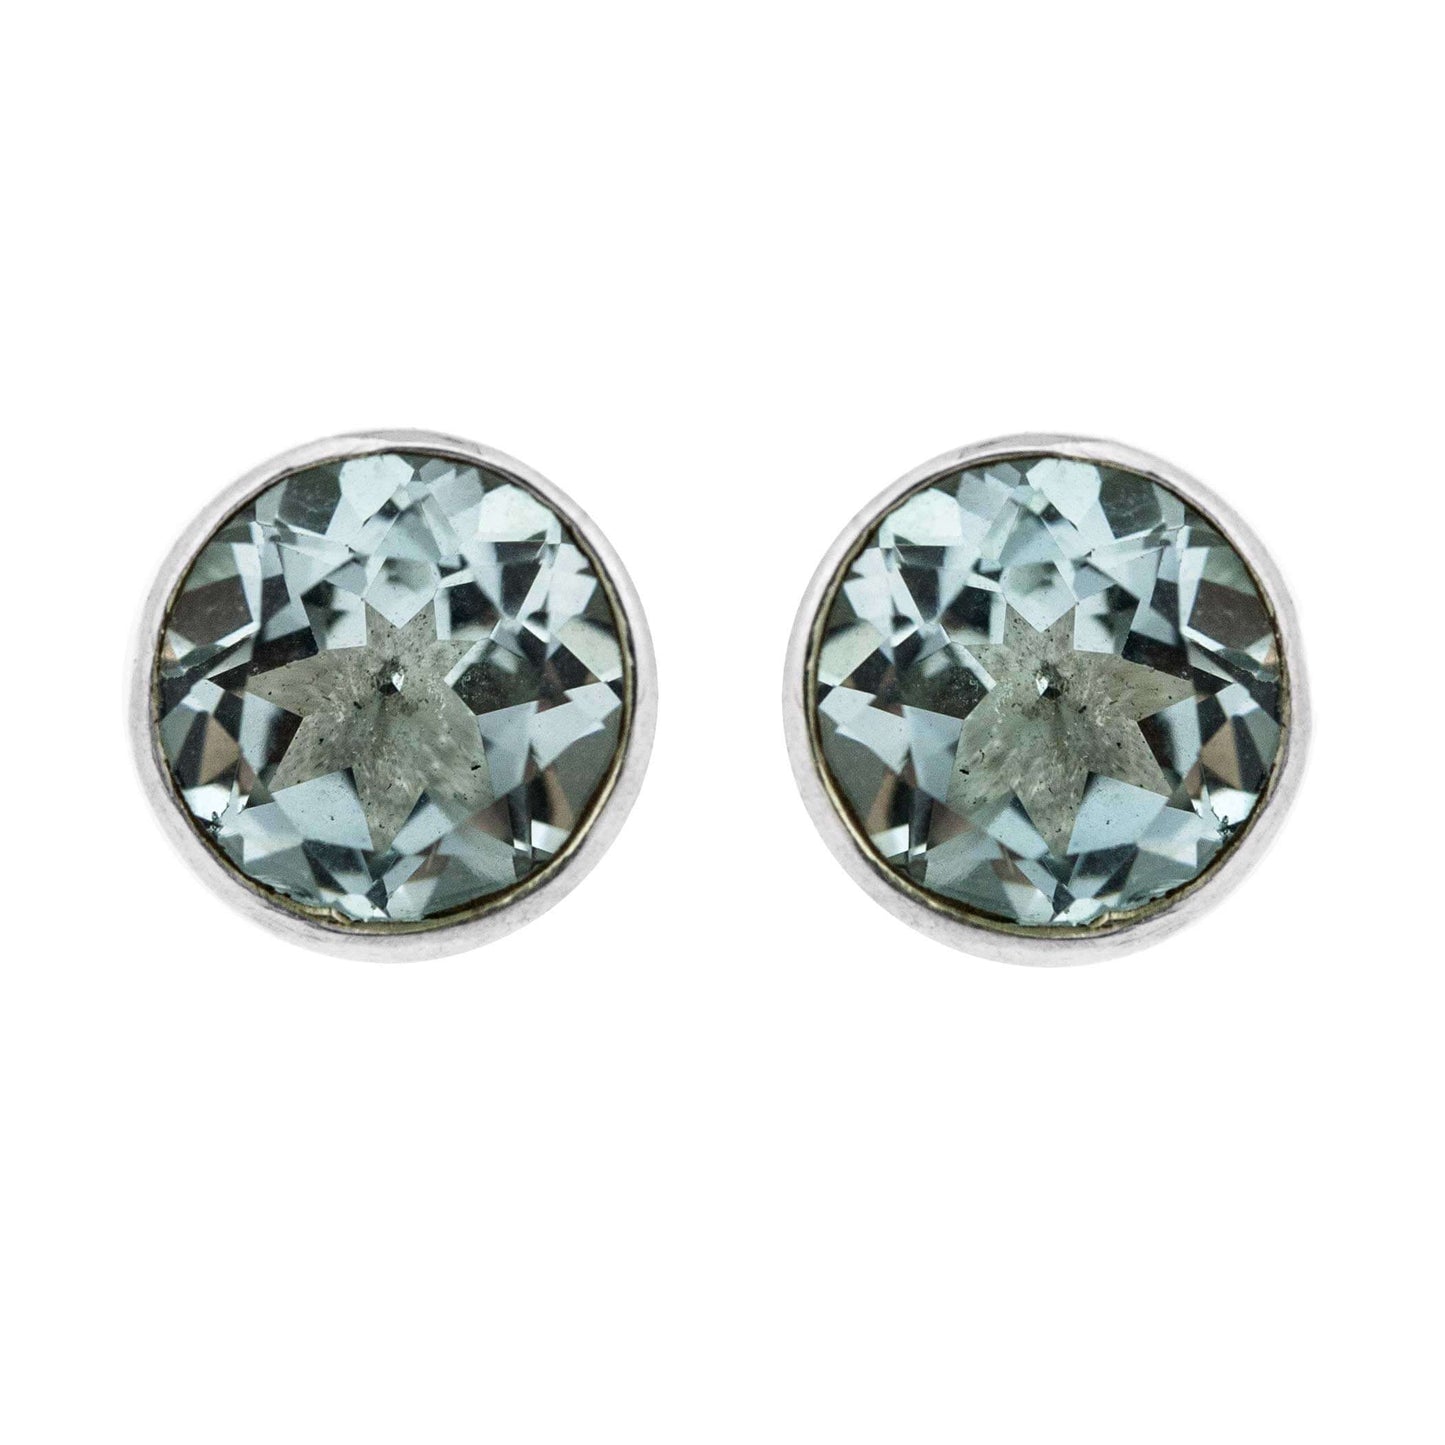 8mm Round Blue Topaz Sterling Silver Stud Earrings - Twelve Silver Trees